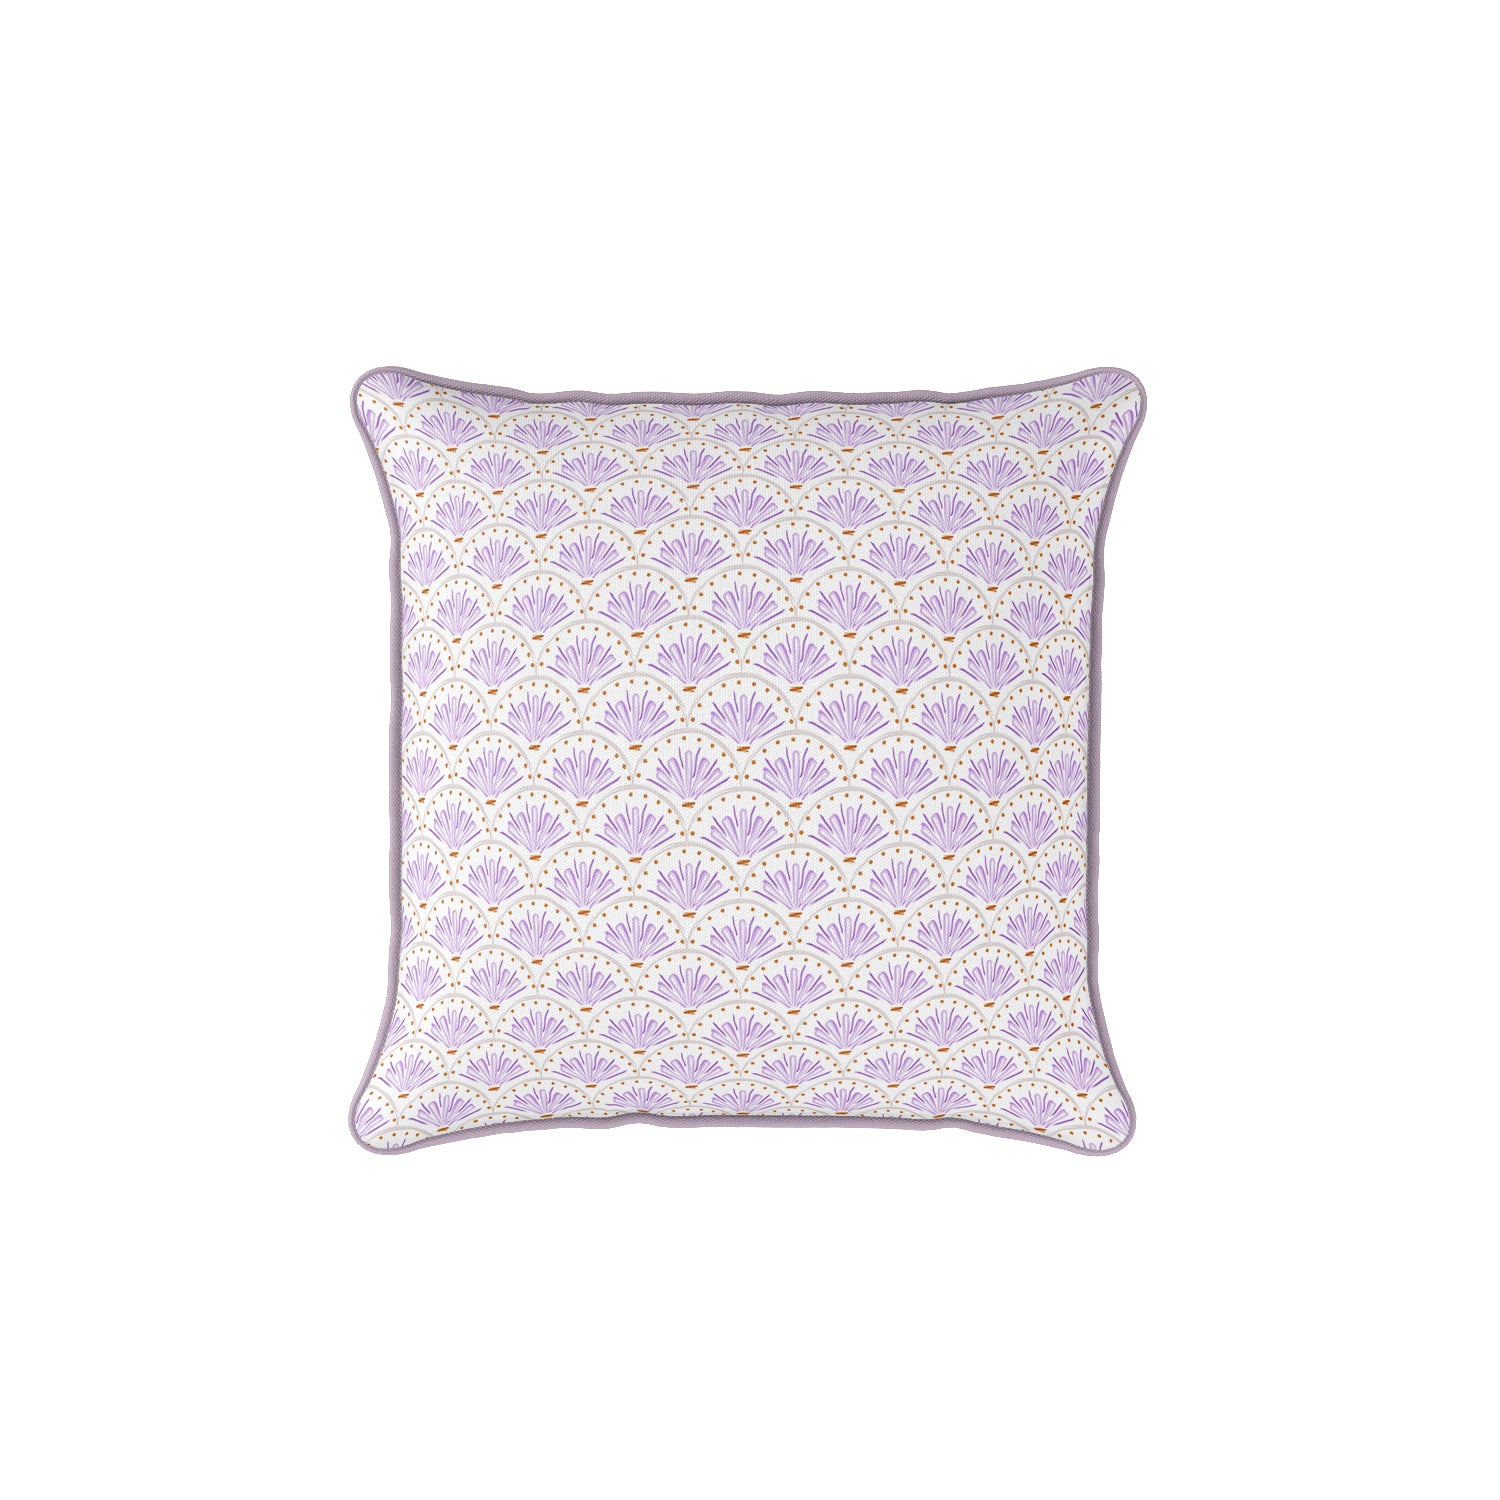 densed_flowers_square_pillow_purple_lilac.jpg